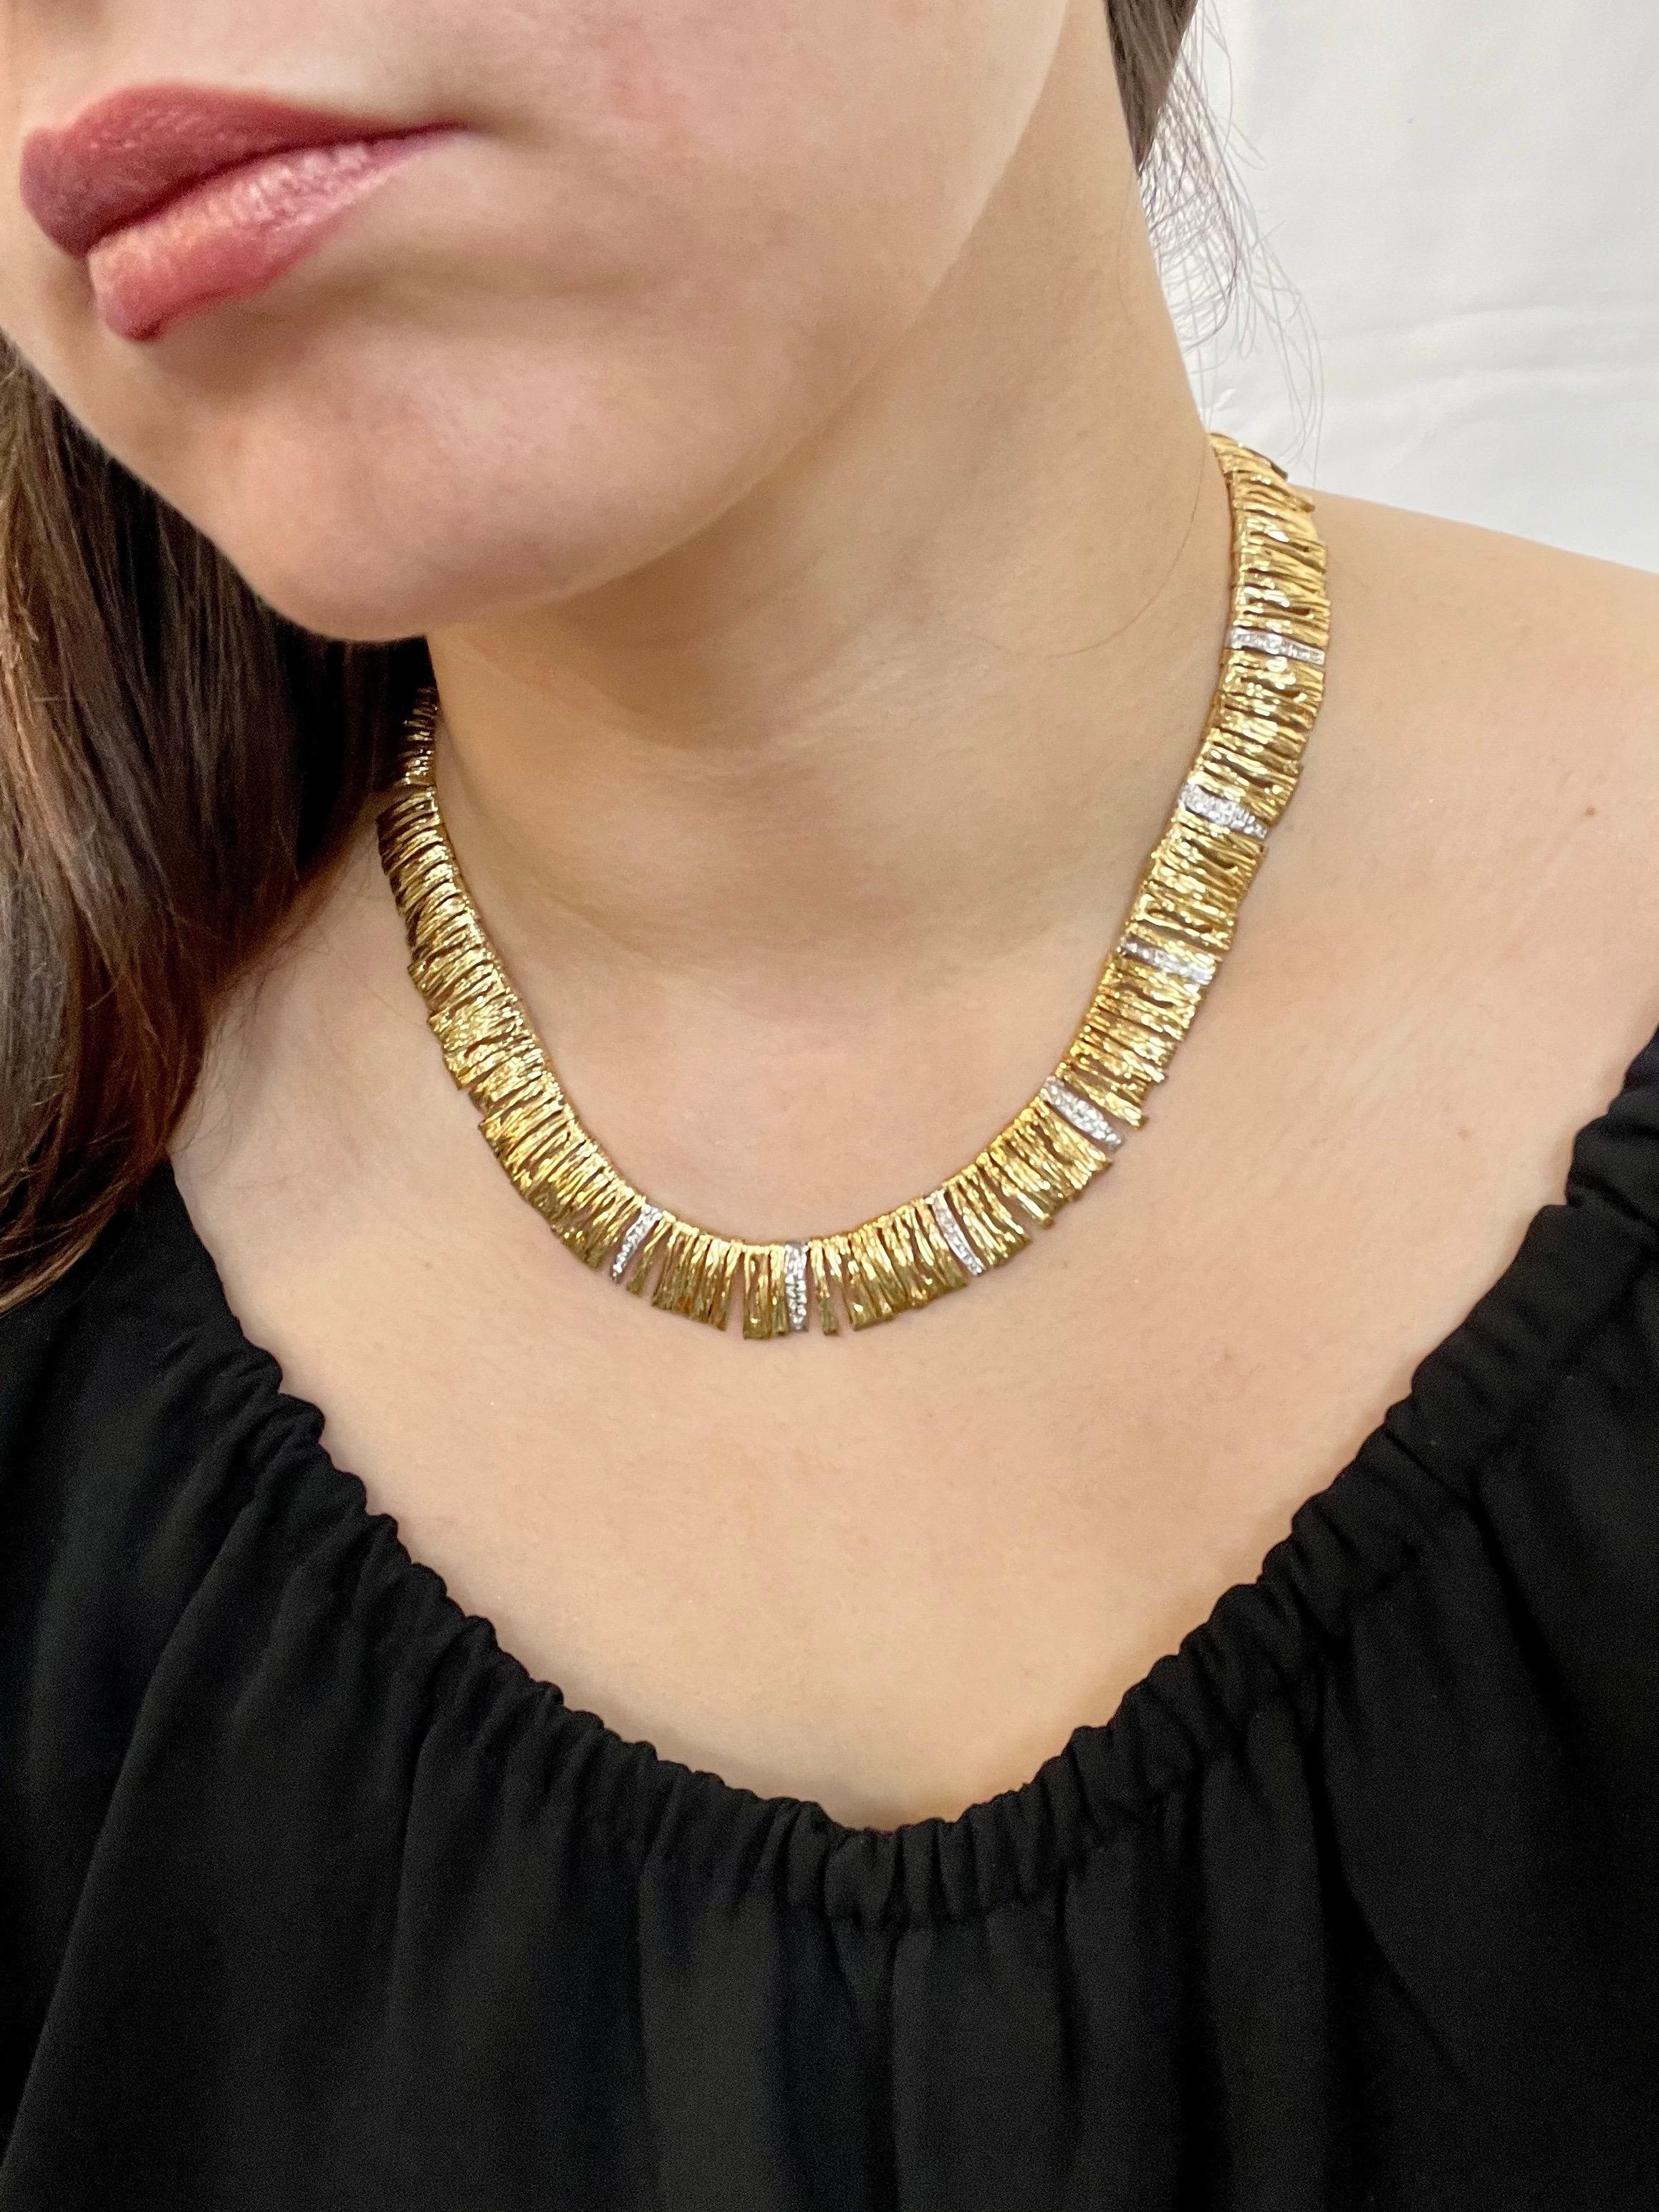 Designer Roberto Coin Diamond Elephant Skin Necklace, 18 Karat Gold 53 Grams For Sale 2